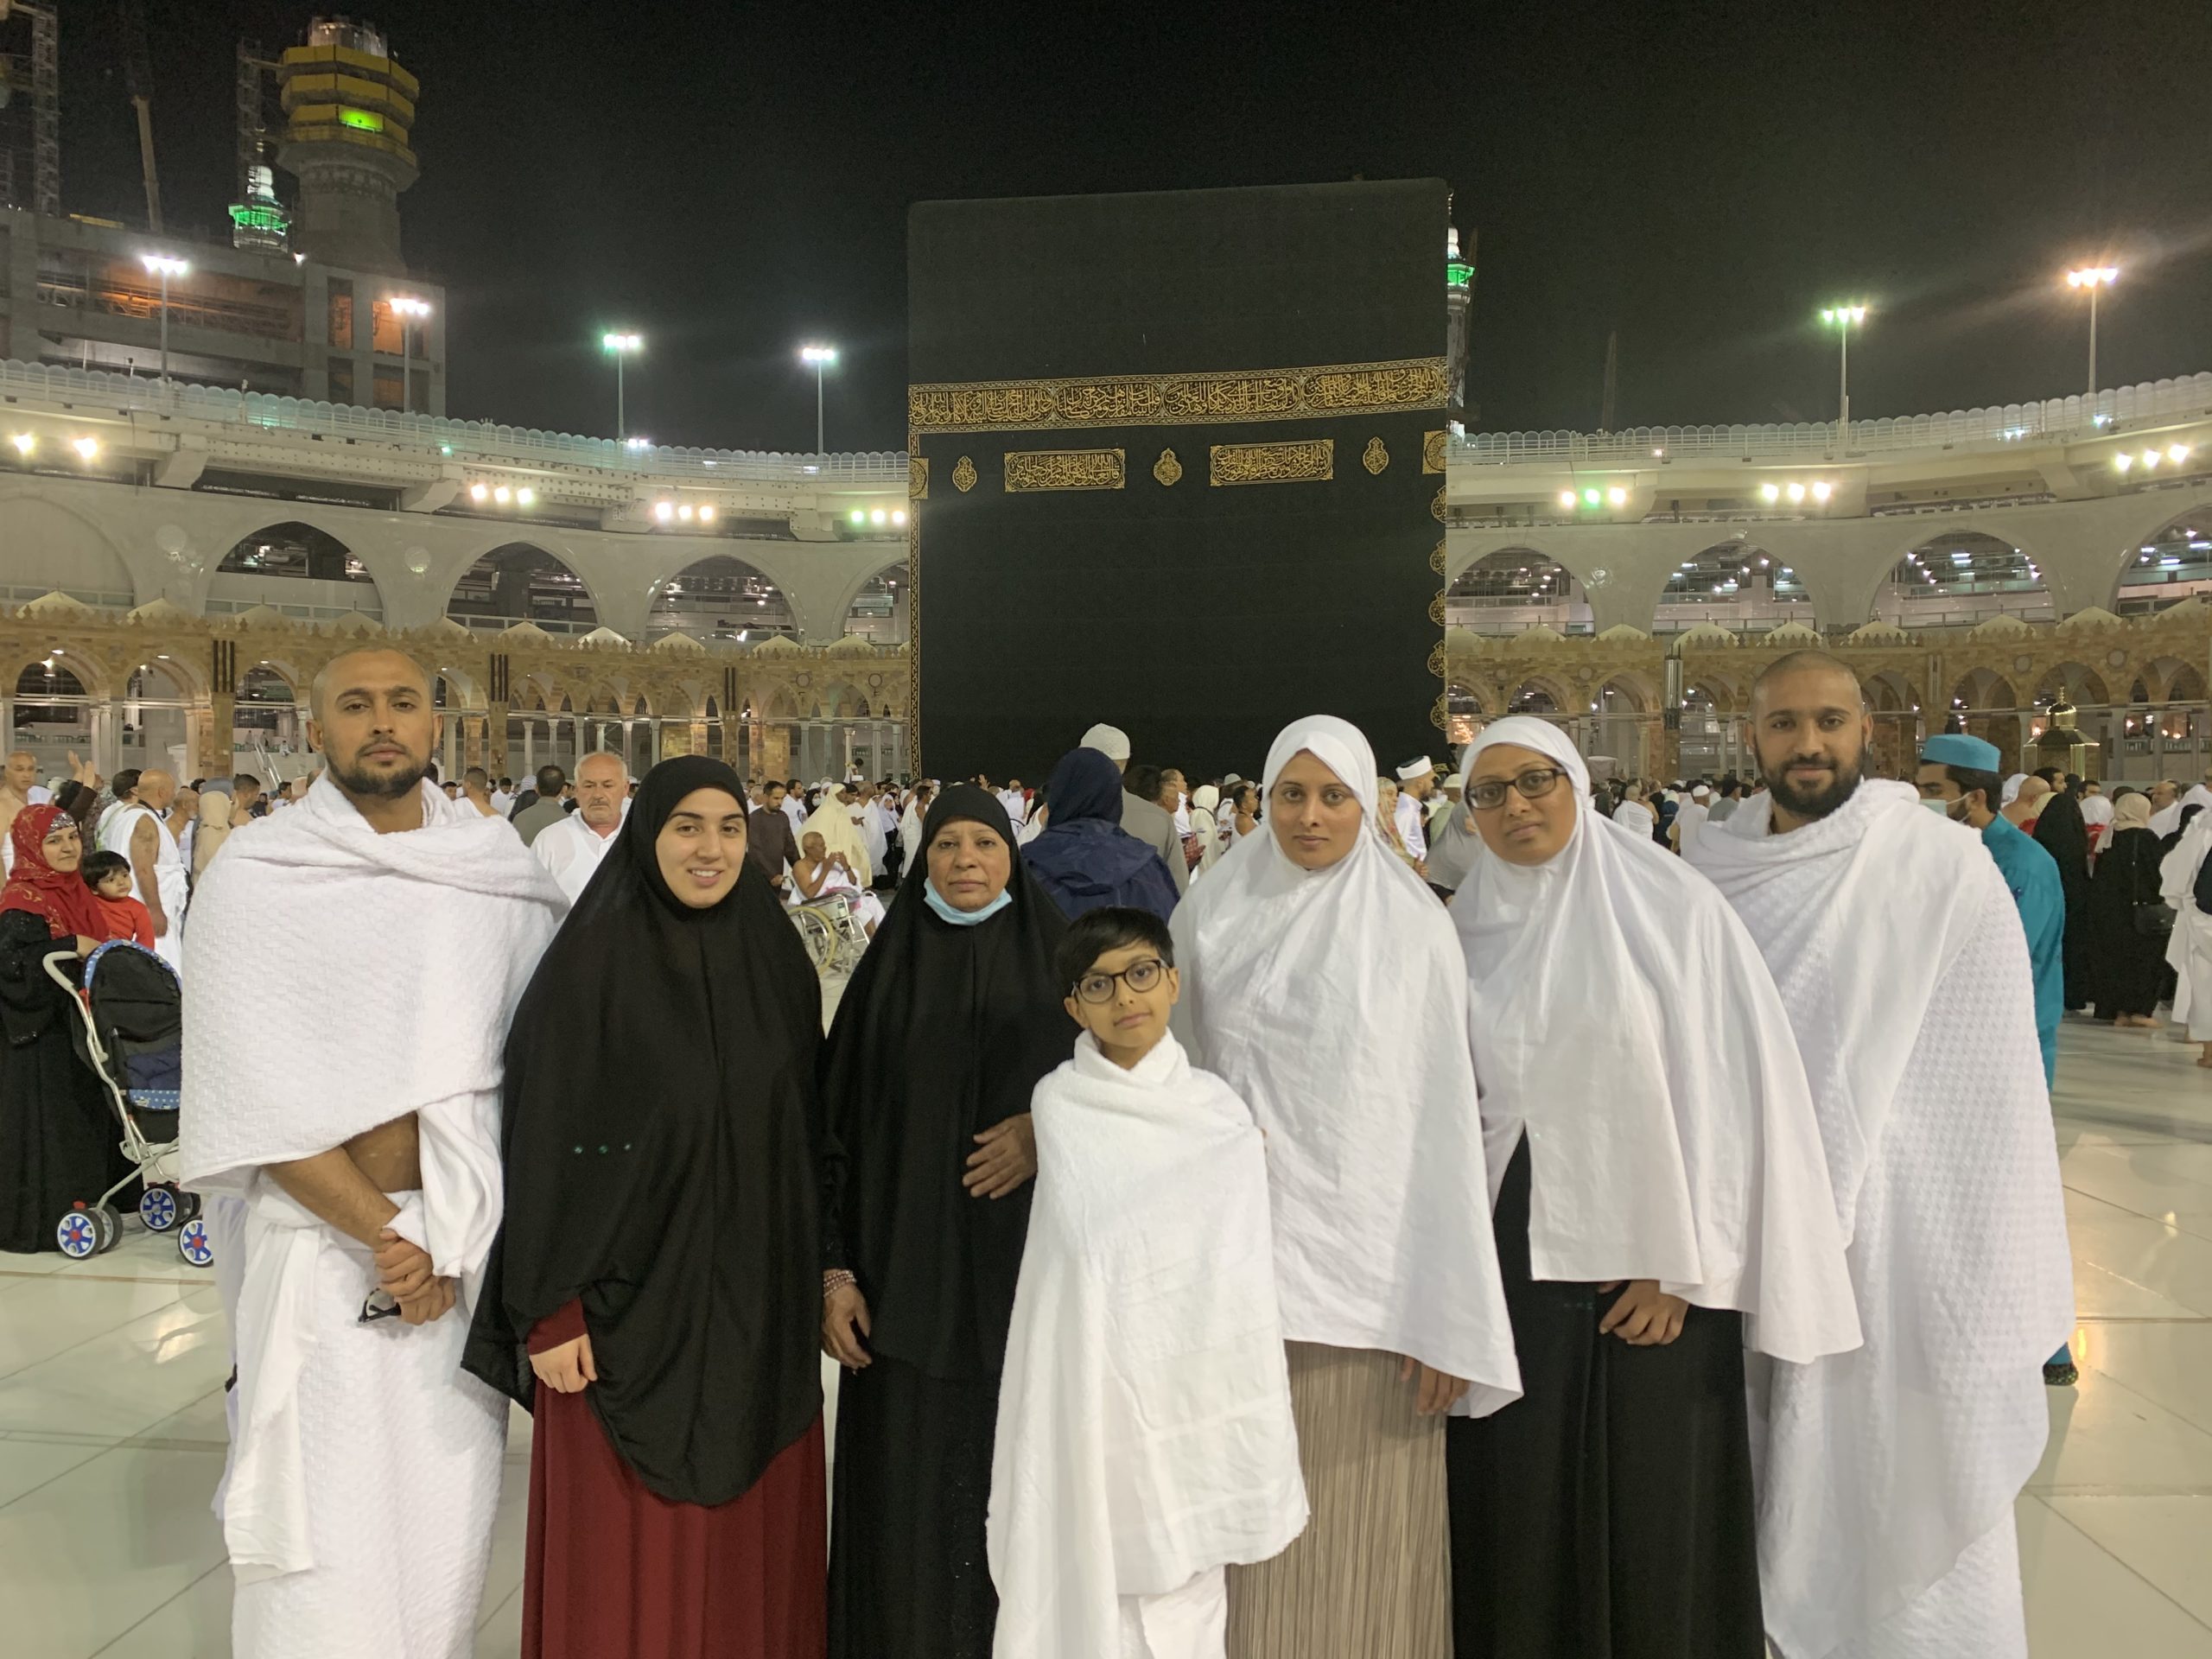 Samea and her family in Saudi Arabia for pilgrimage